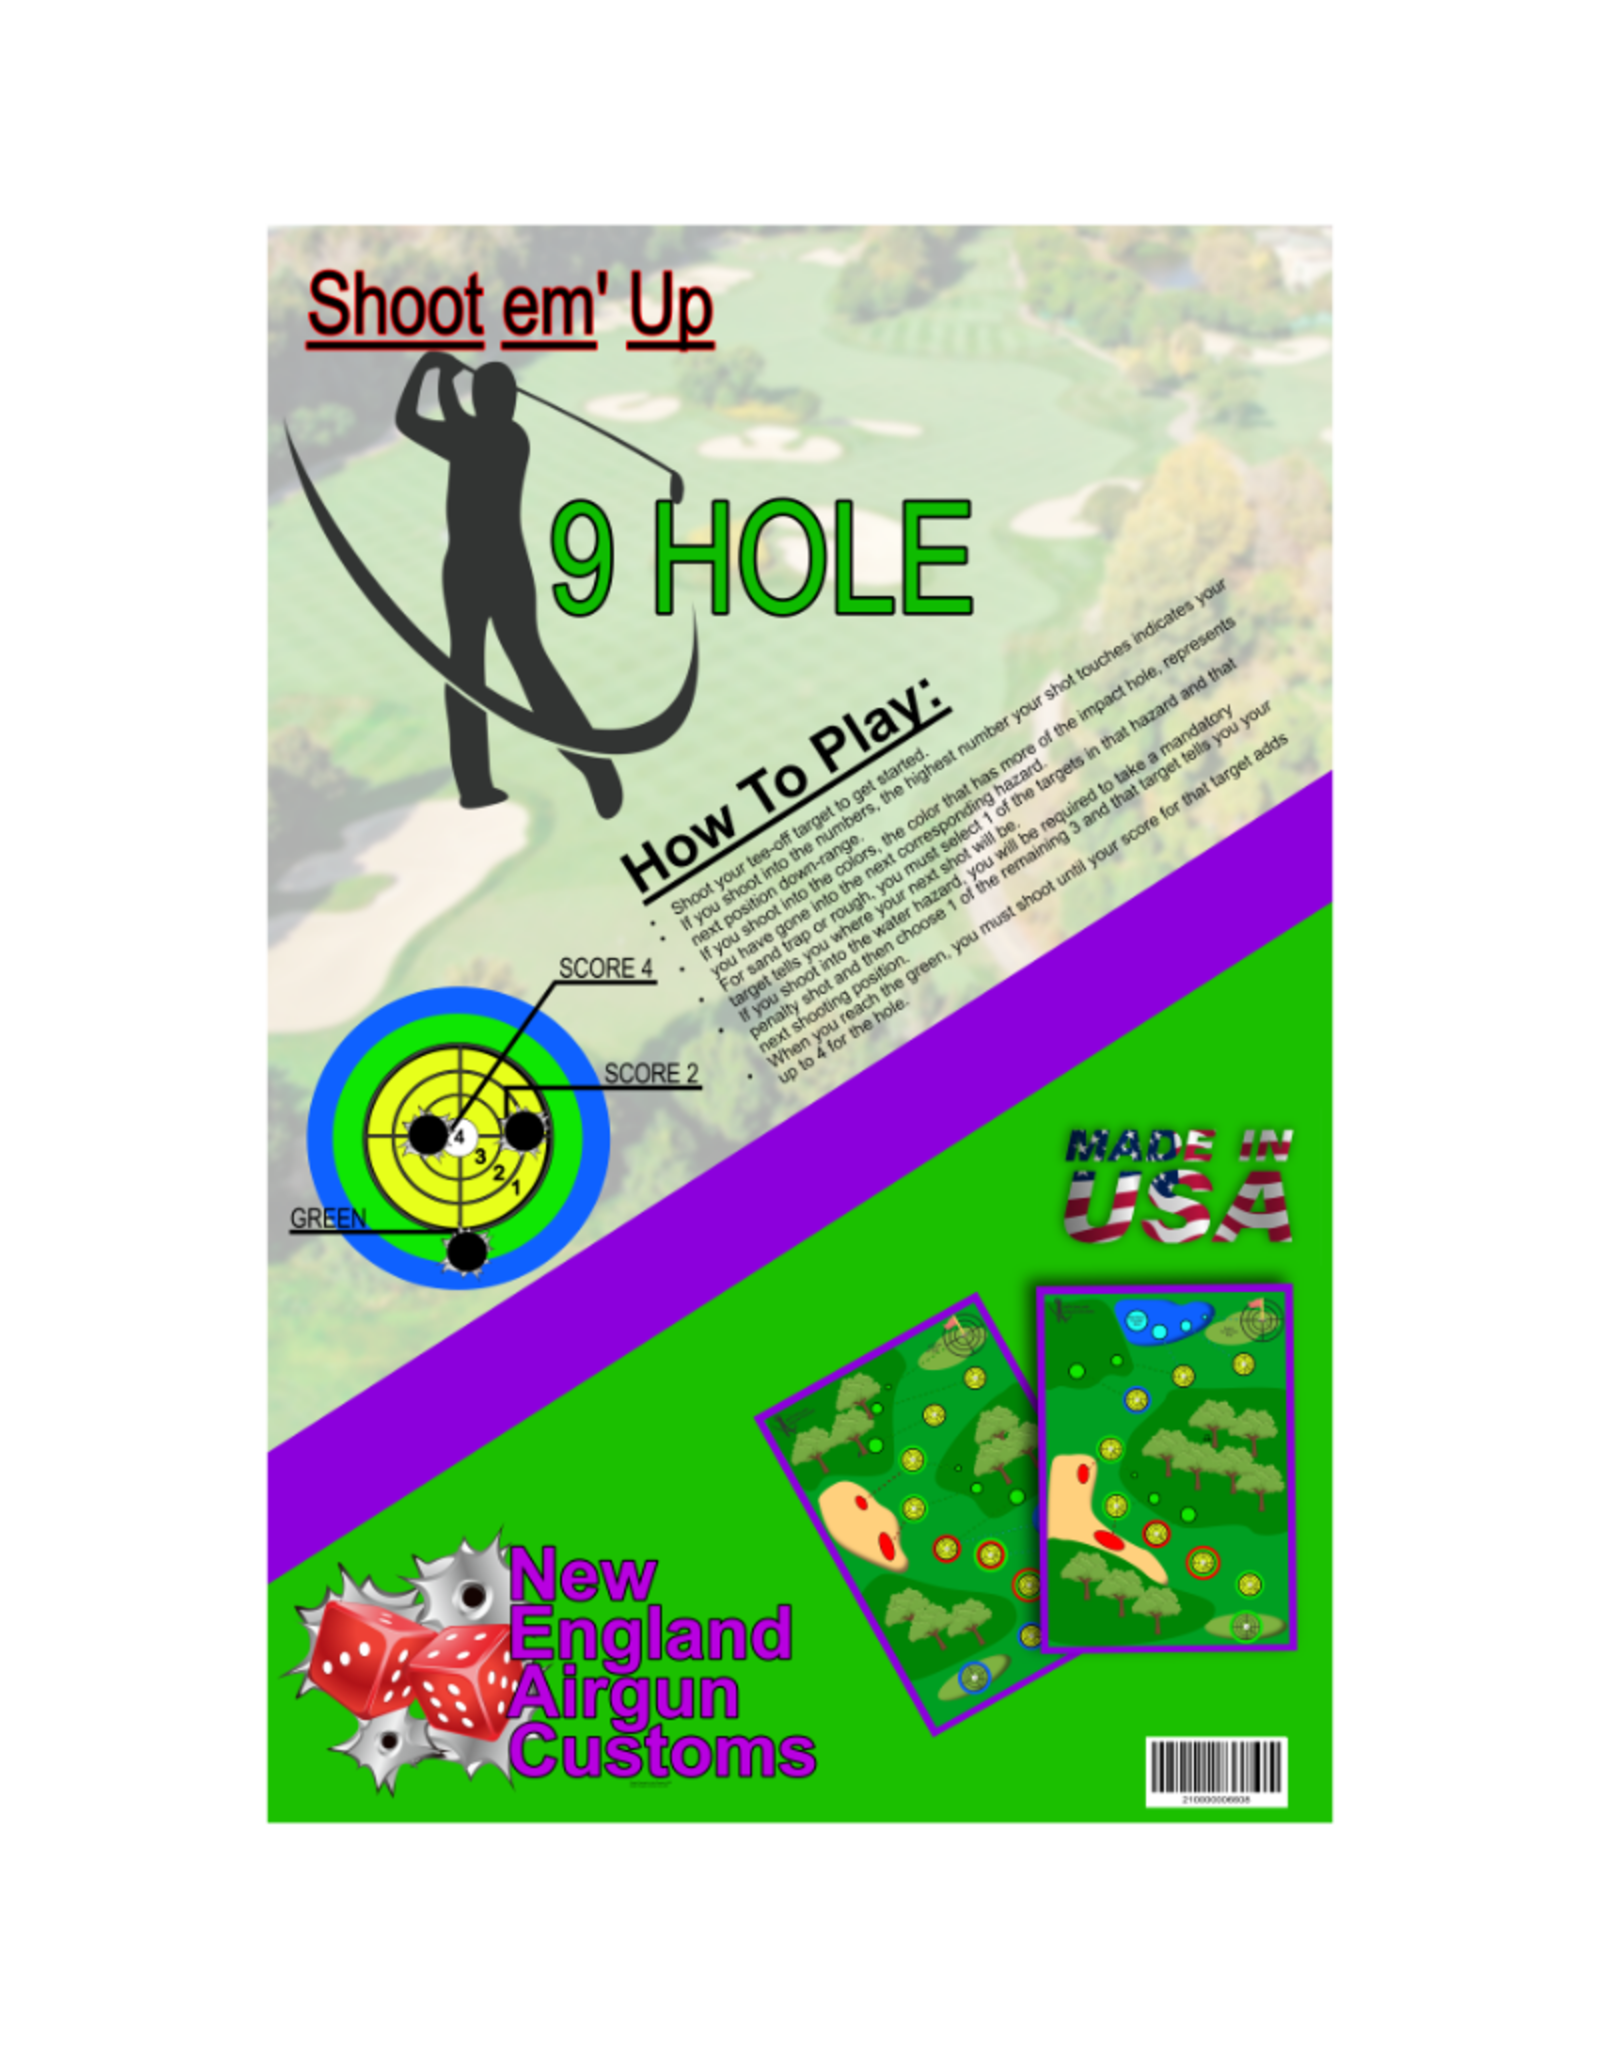 New England Airgun 18 Pack - 9 Hole Golf Target Pack | Shoot em’ Up | 9 targets per pack